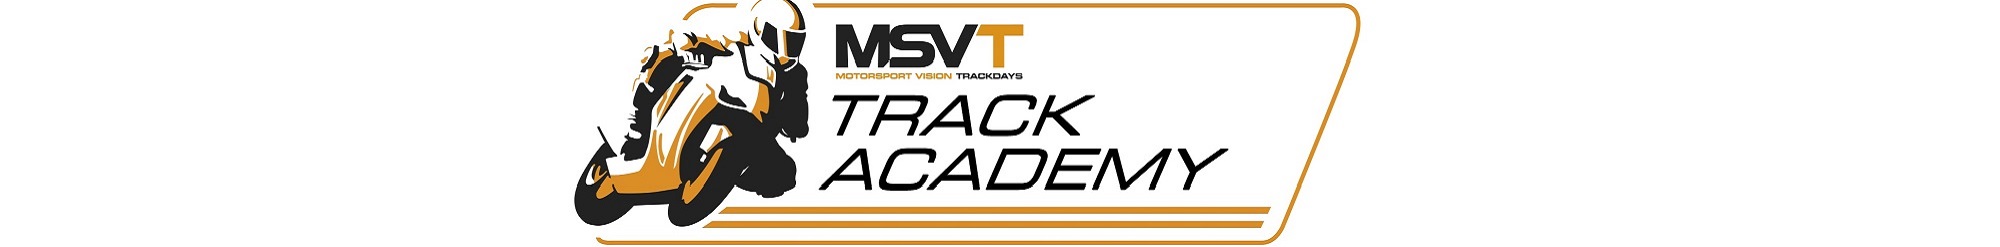 Track Academy